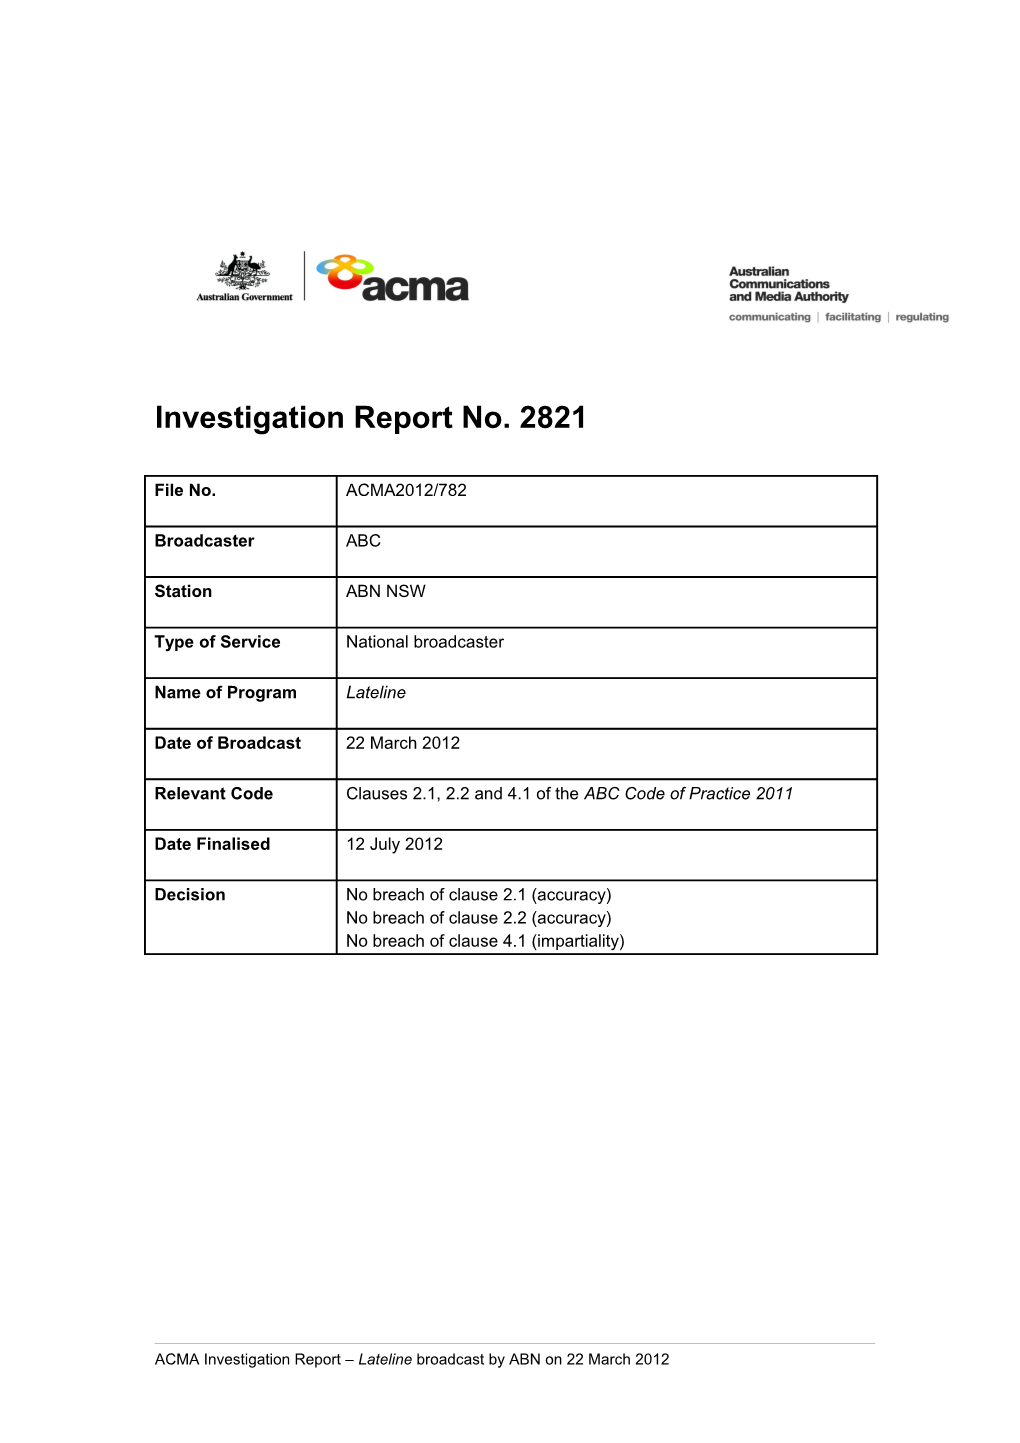 ABC (ABN NSW) - ACMA Investigation Report 2821